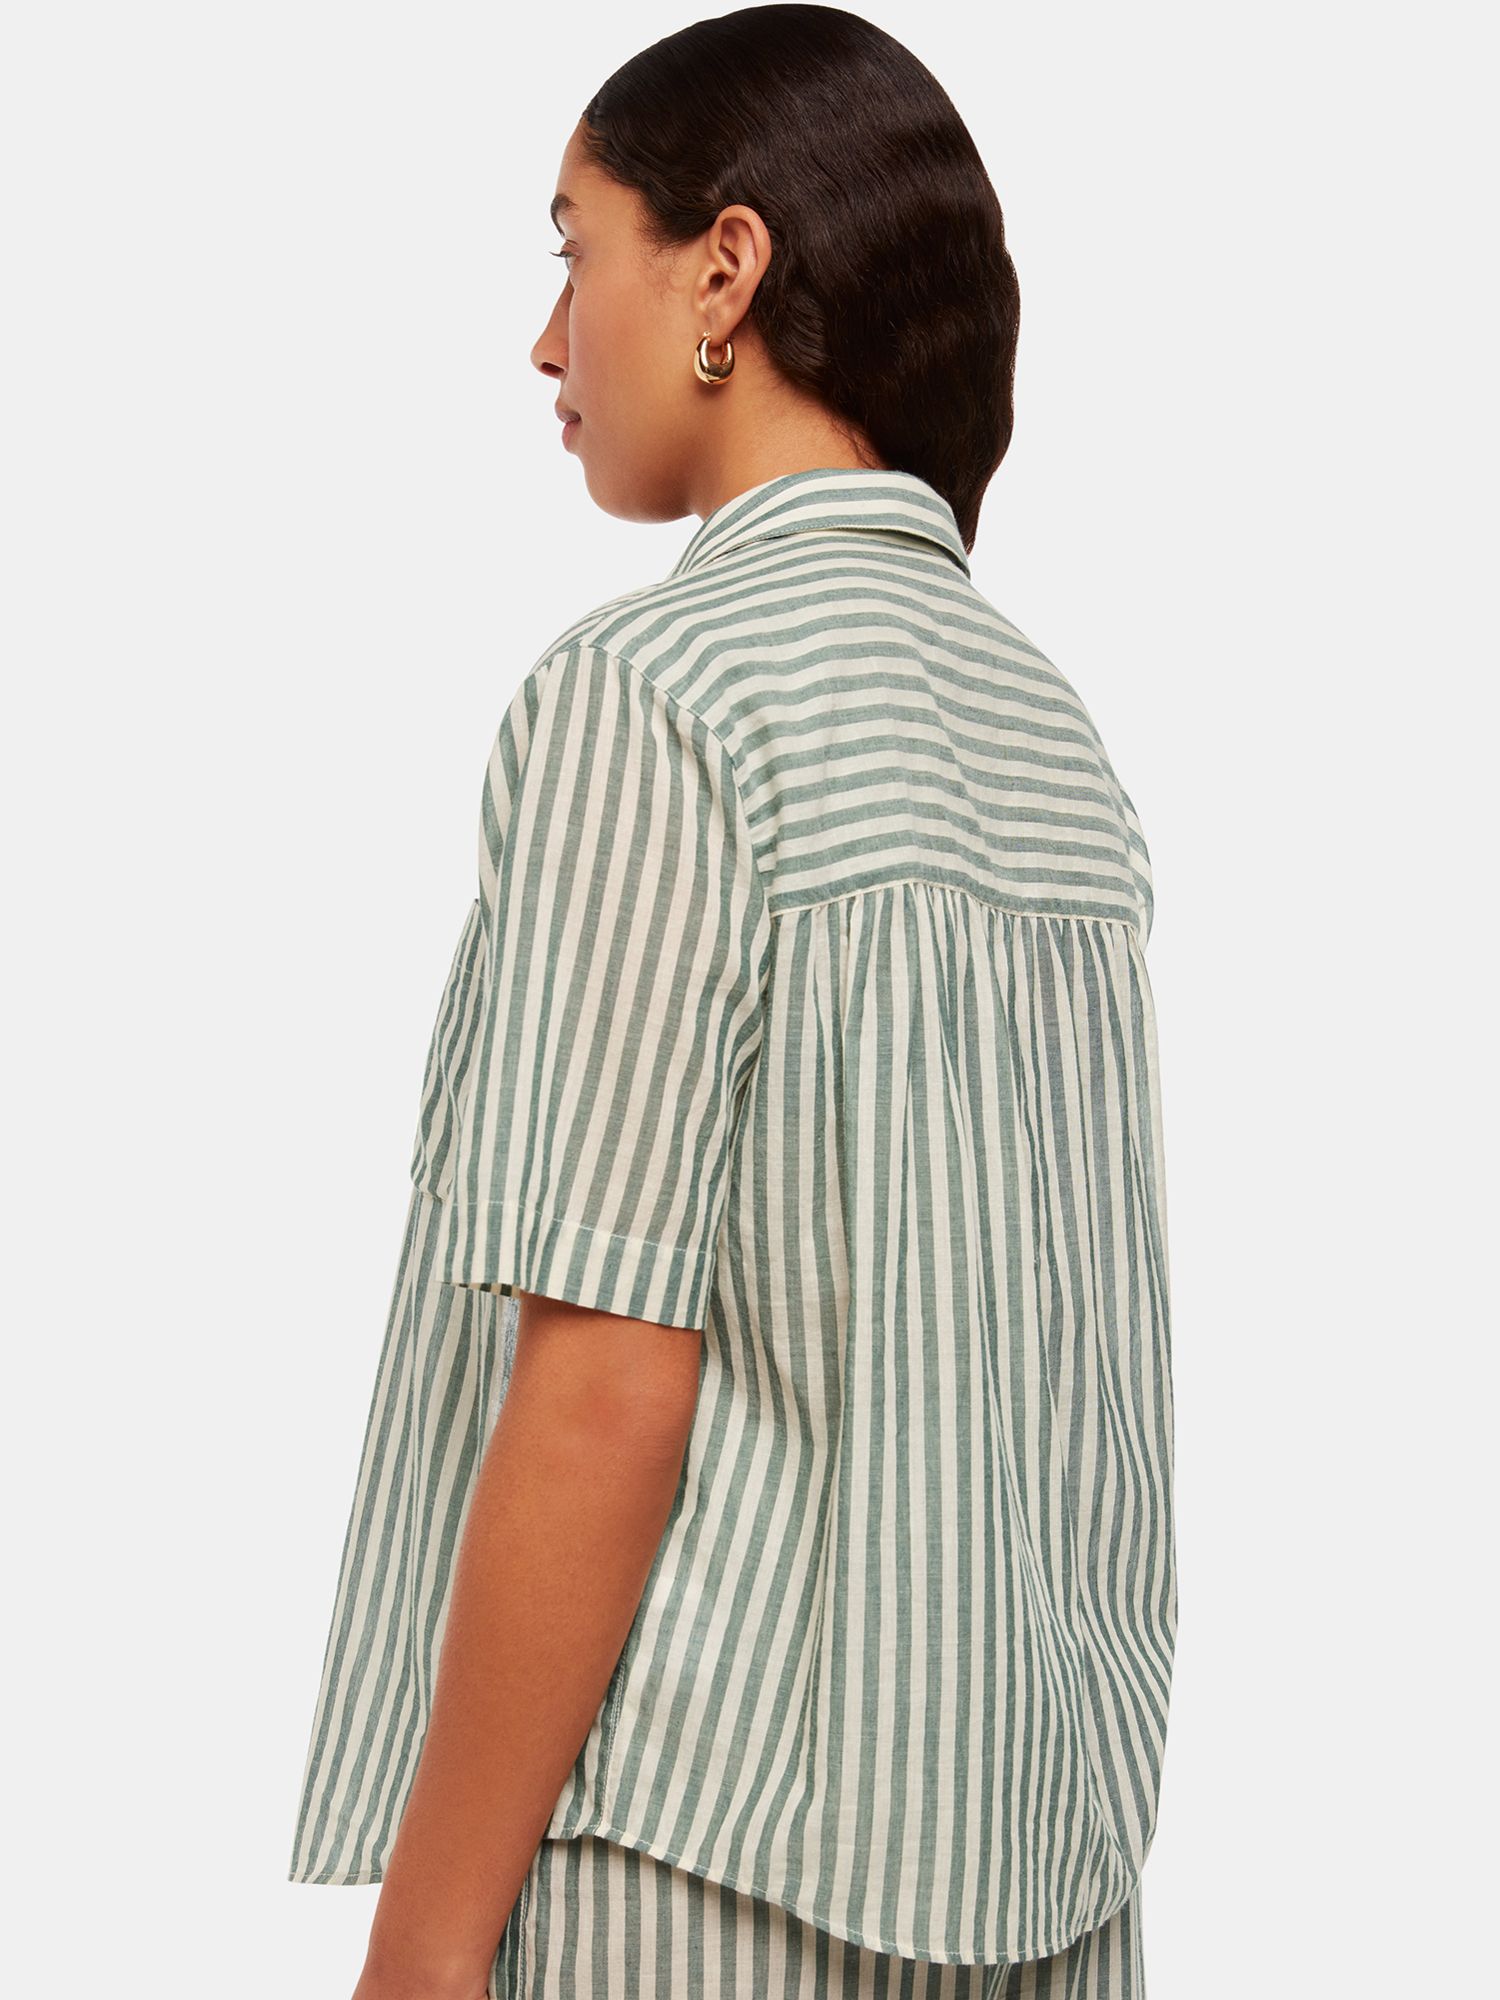 Whistles Striped Cotton Beach Shirt, Green/Multi, XS